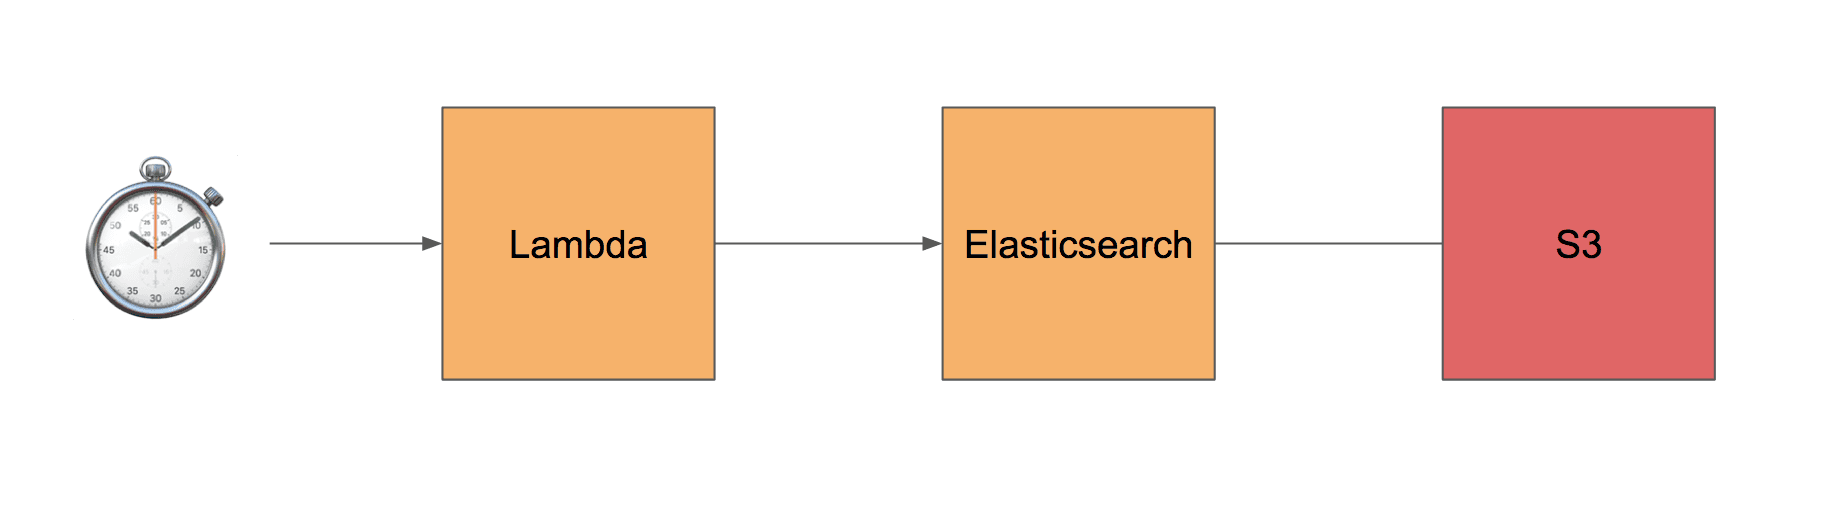 Triggering Elasticsearch snapshots with Lambda